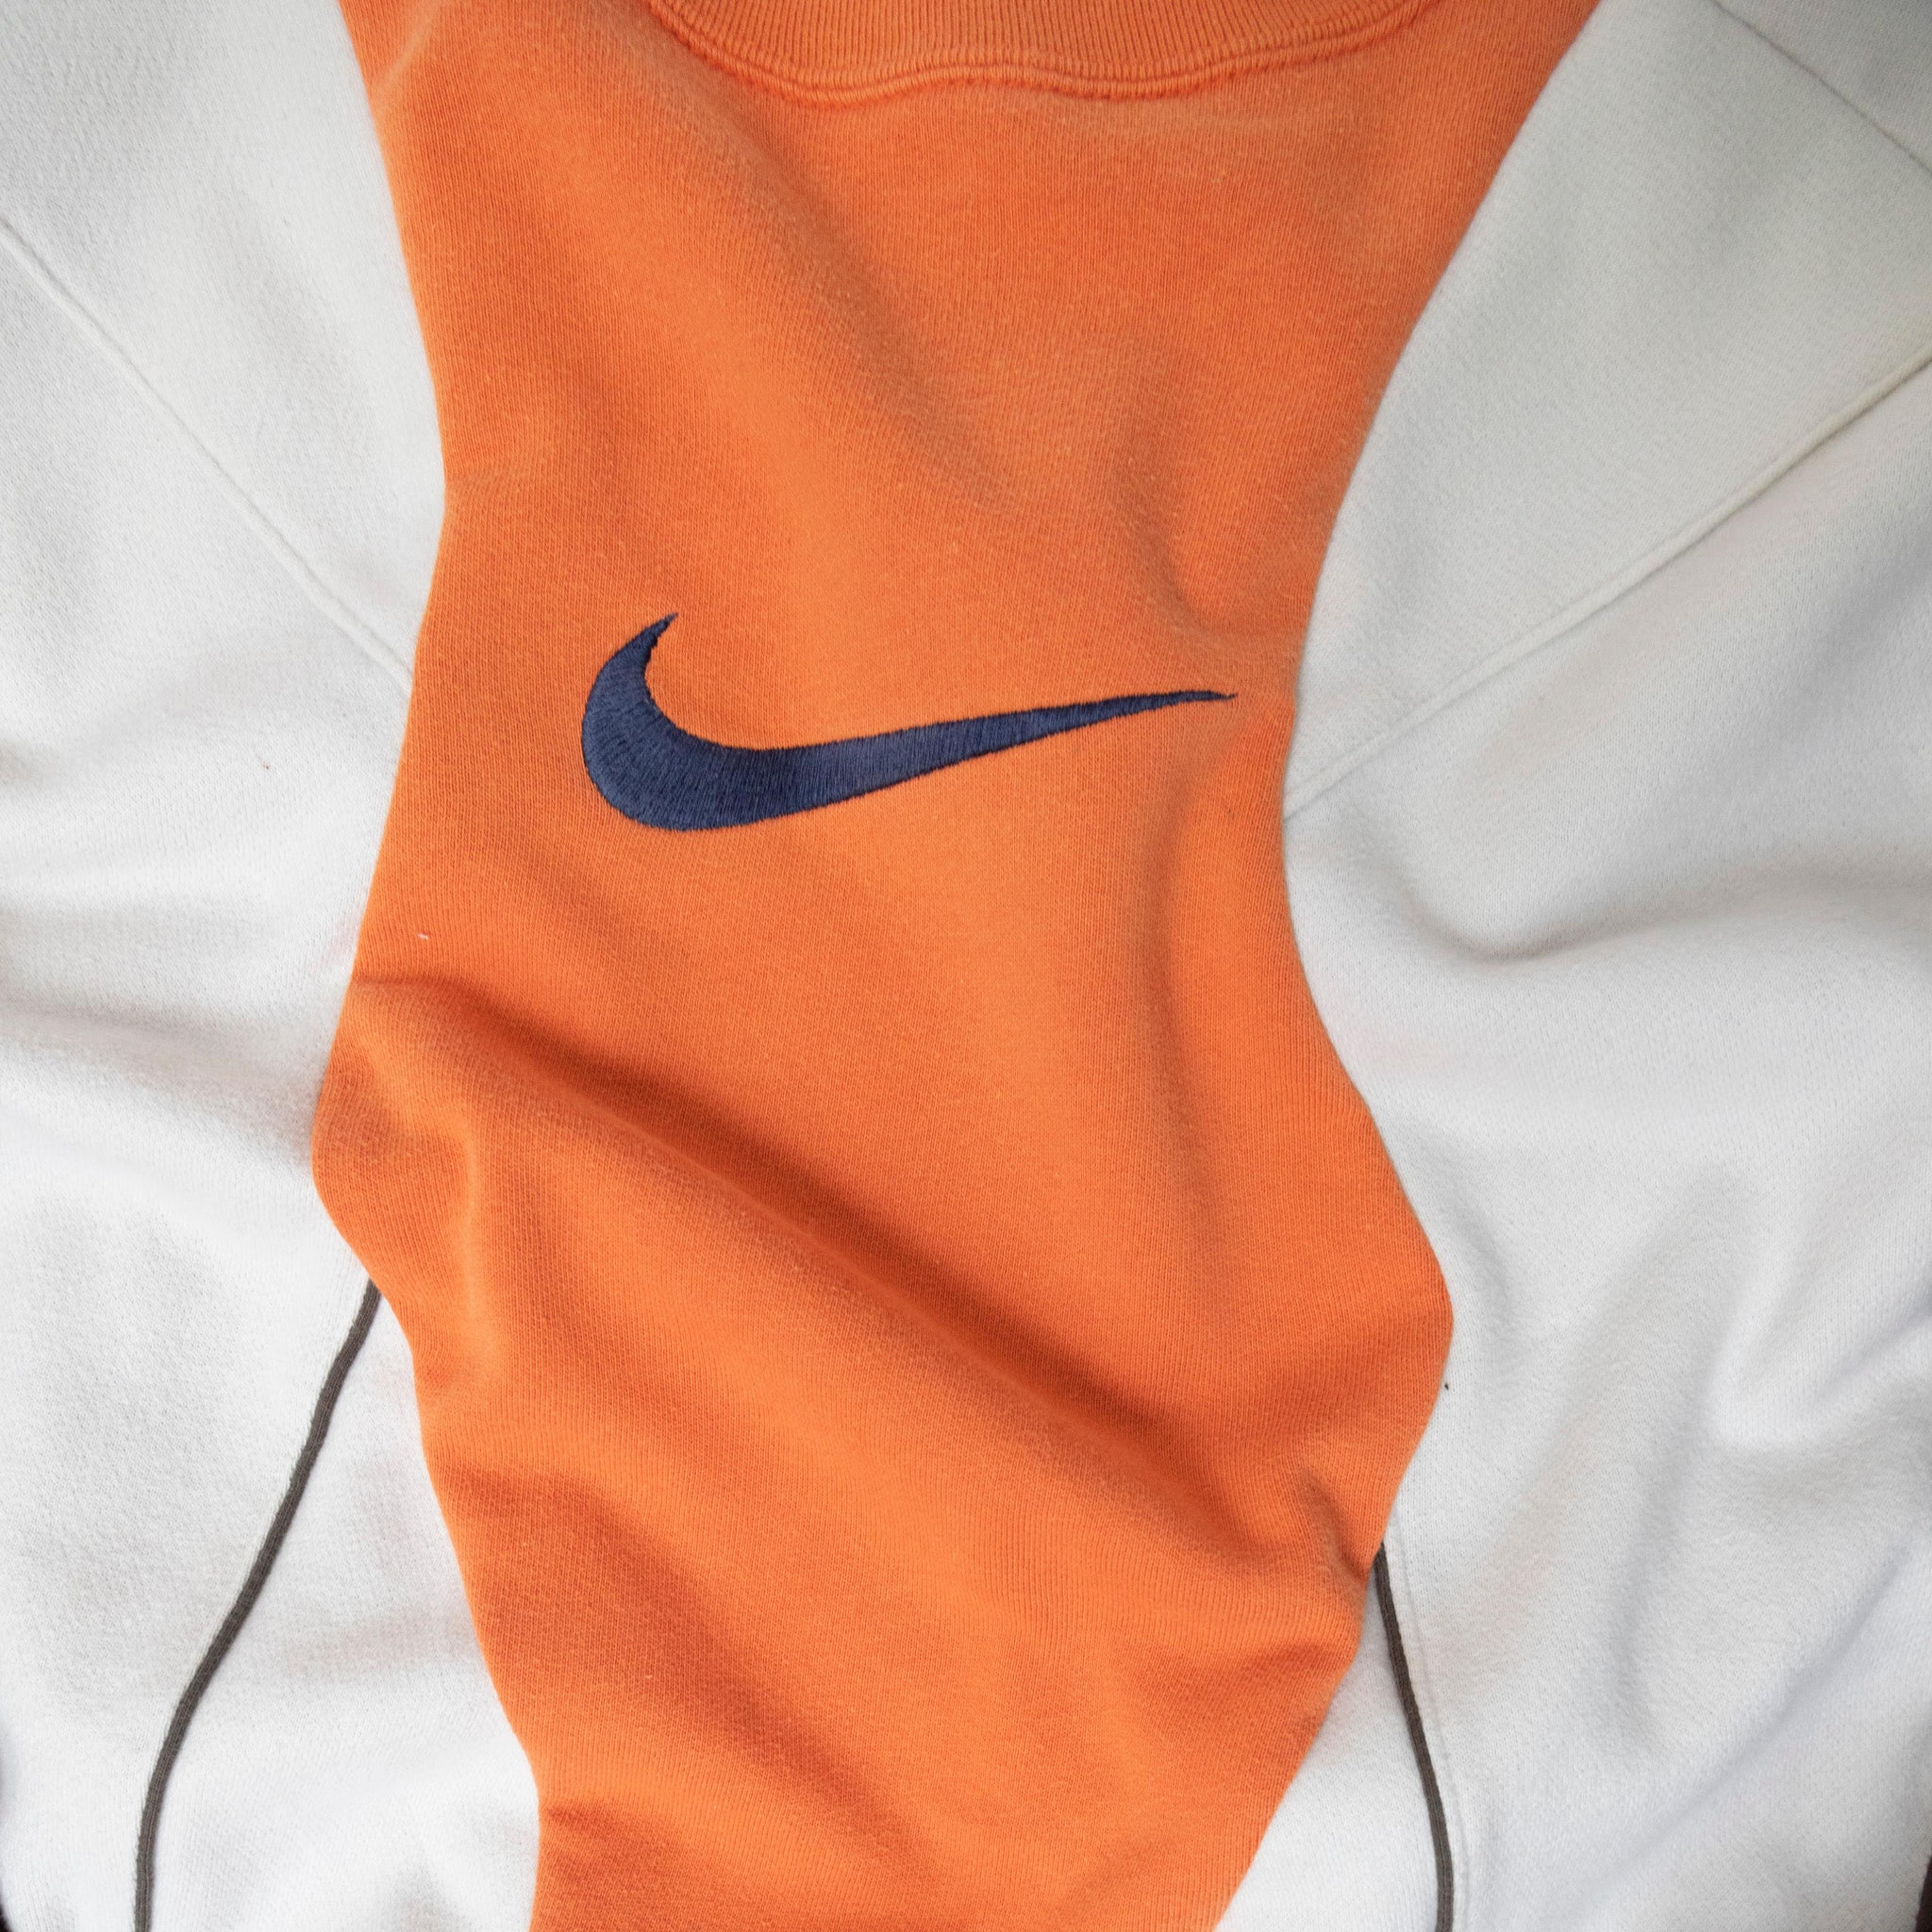 Alternate View 2 of VT Rework: Nike Wavy Orange Sweater